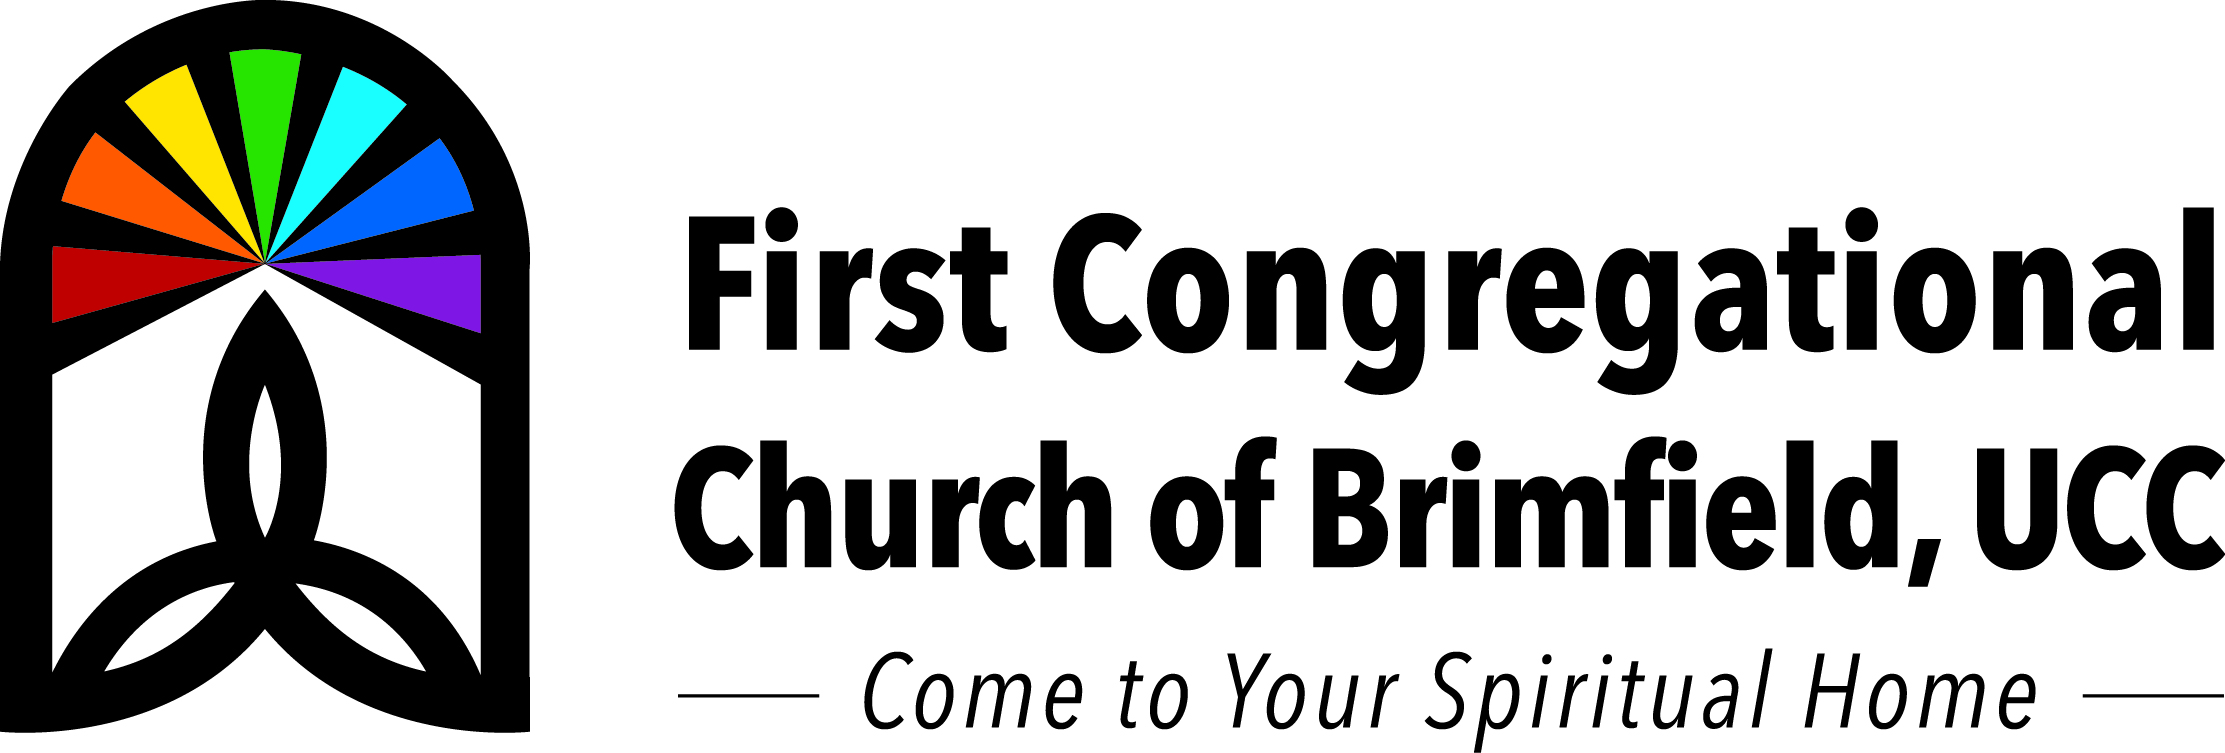 First Congregational Church of Brimfield, UCC